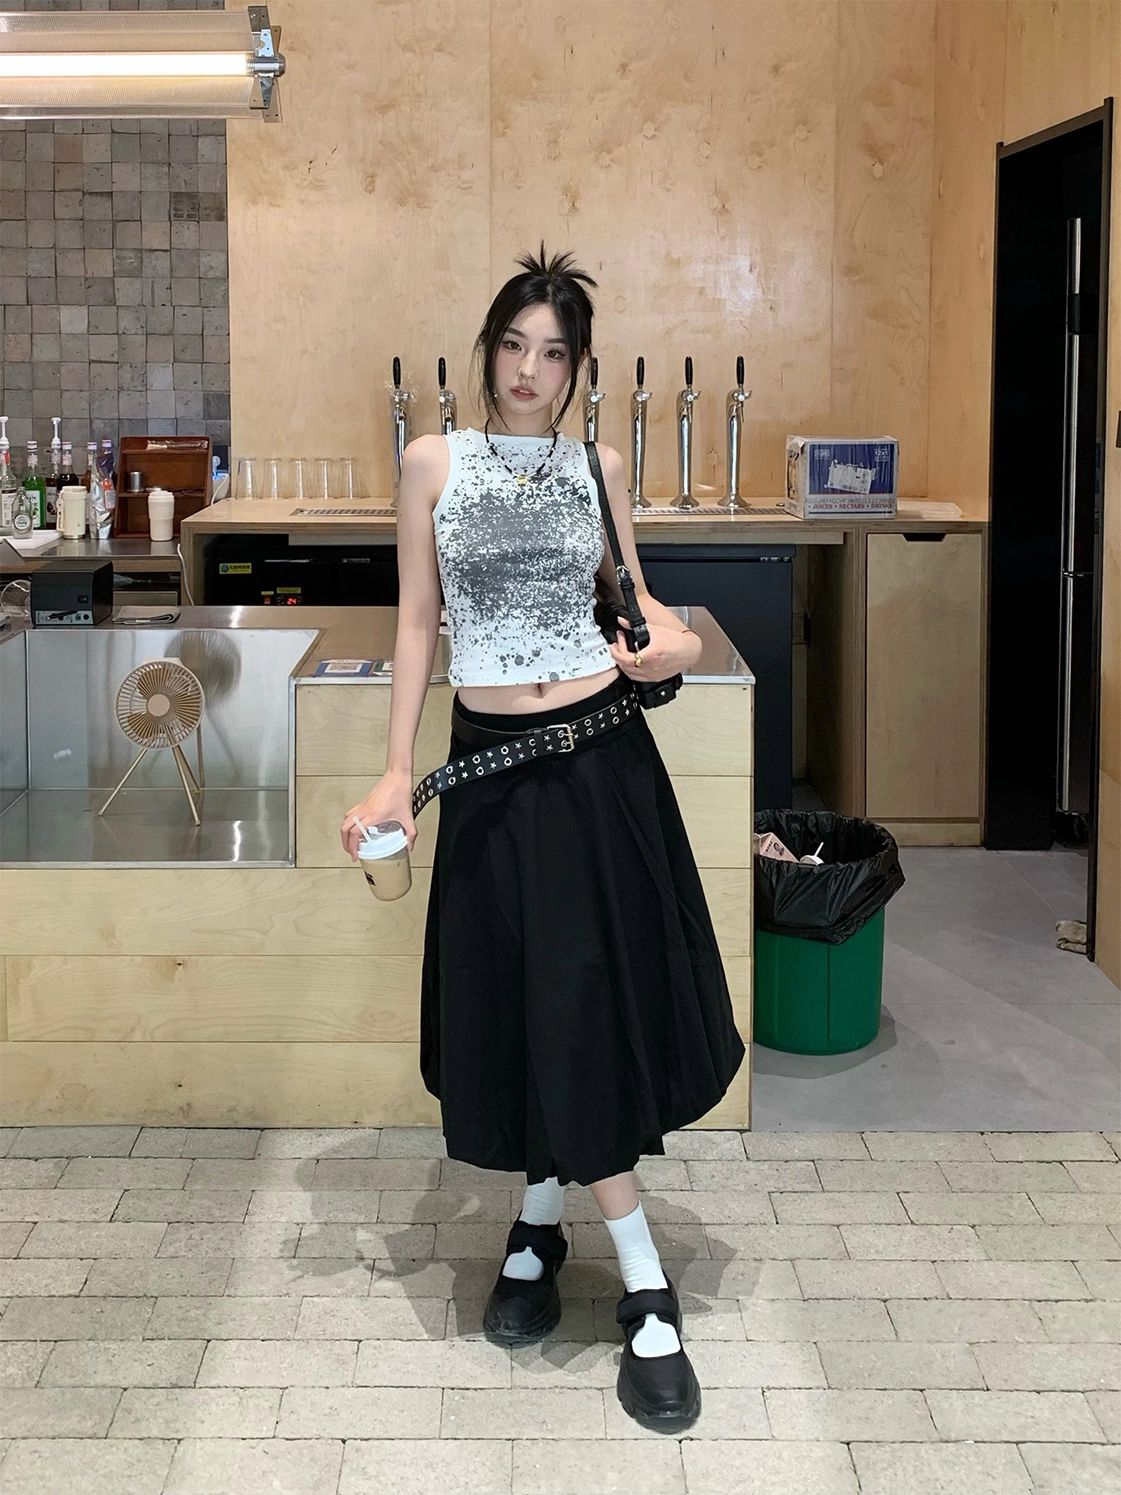 Minimal Balloon Skirt Korean Street Fashion Skirt By 49PERCENT Shop Online at OH Vault